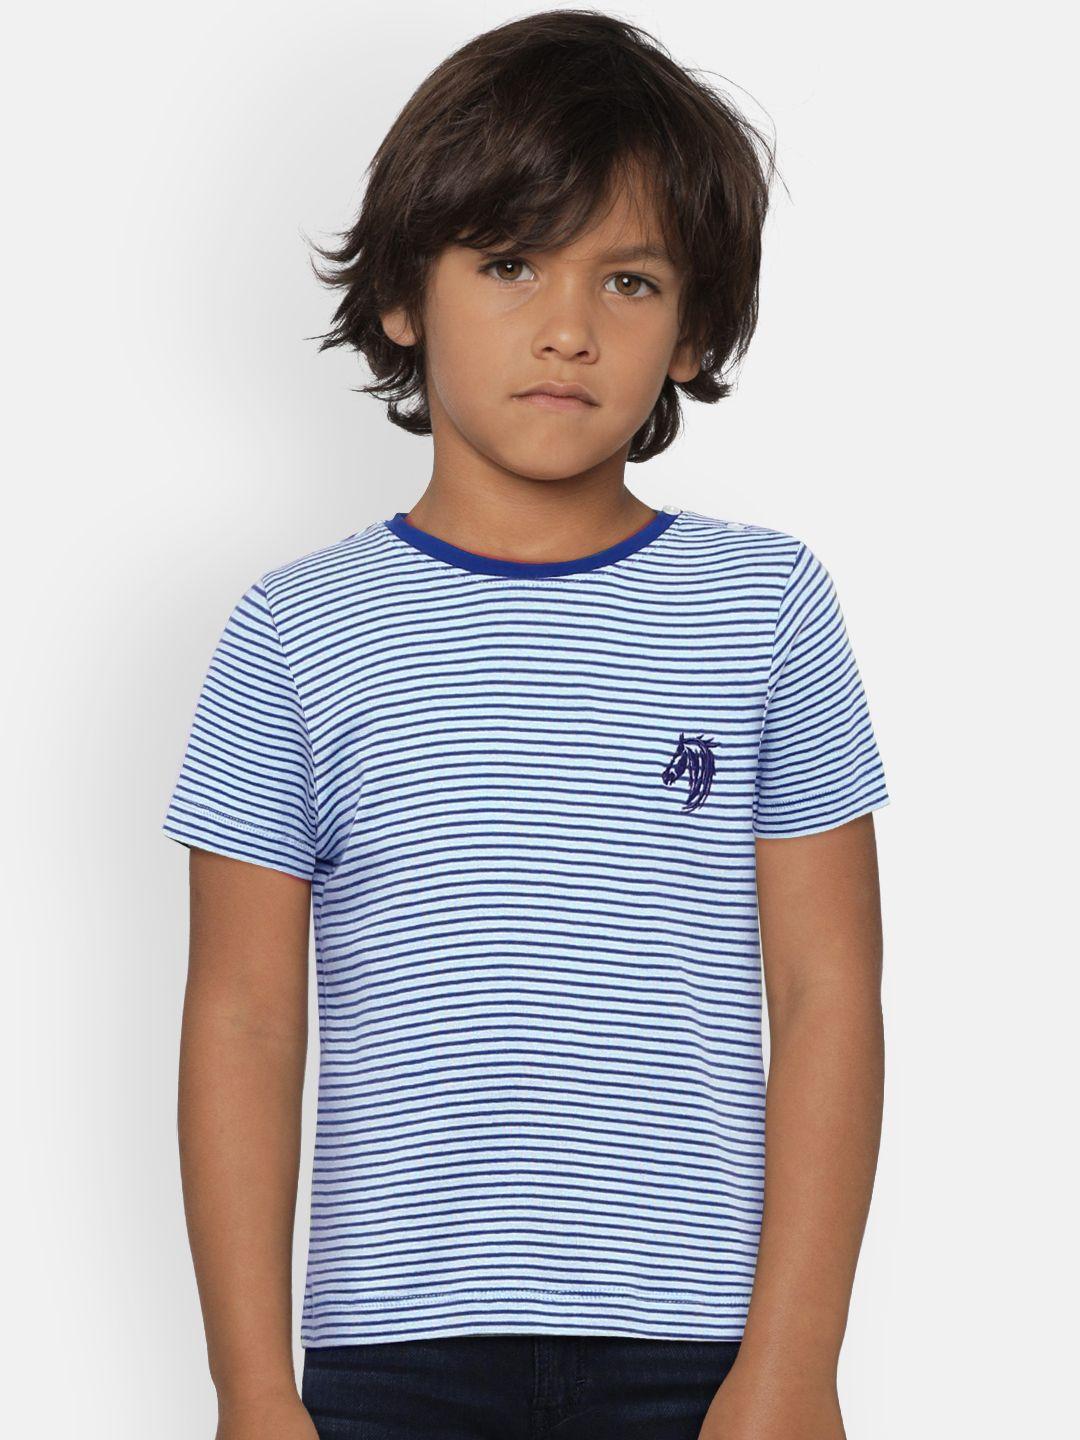 ladore boys blue & white striped organic cotton t-shirt